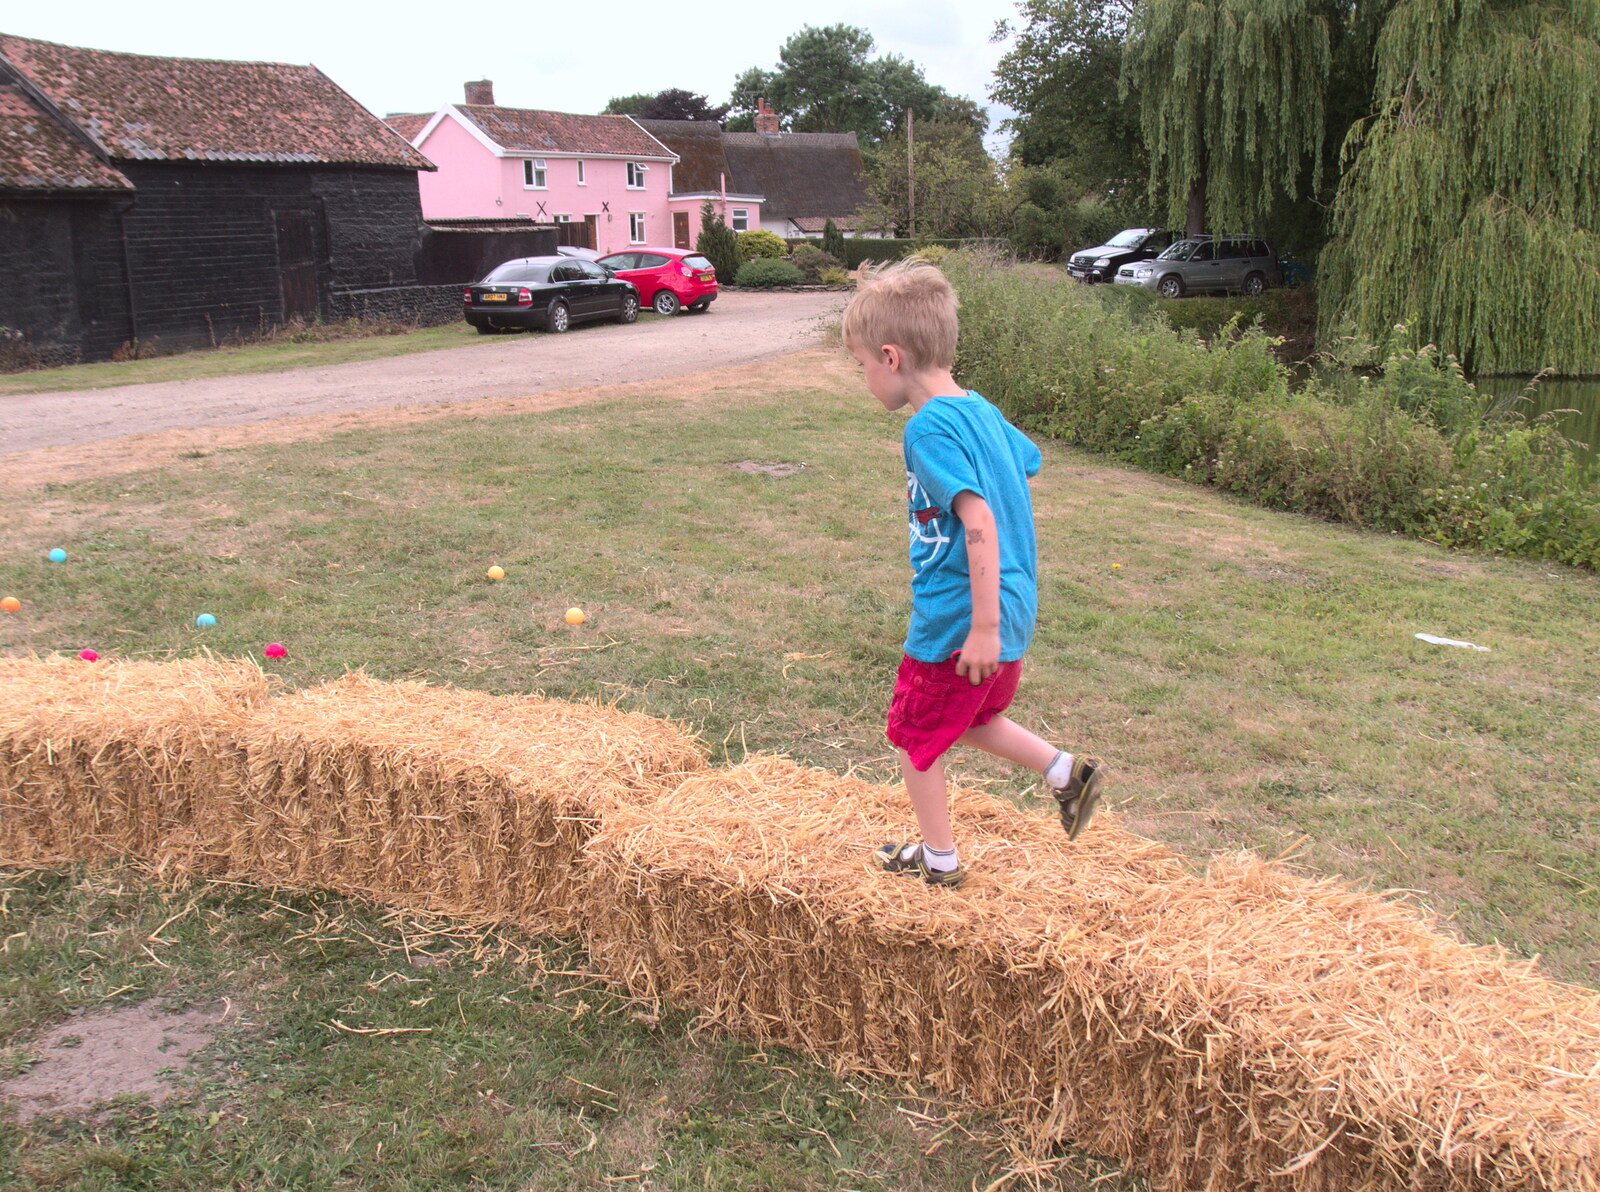 Harry on bales from Thrandeston Pig, Little Green, Thrandeston, Suffolk - 25th June 2017